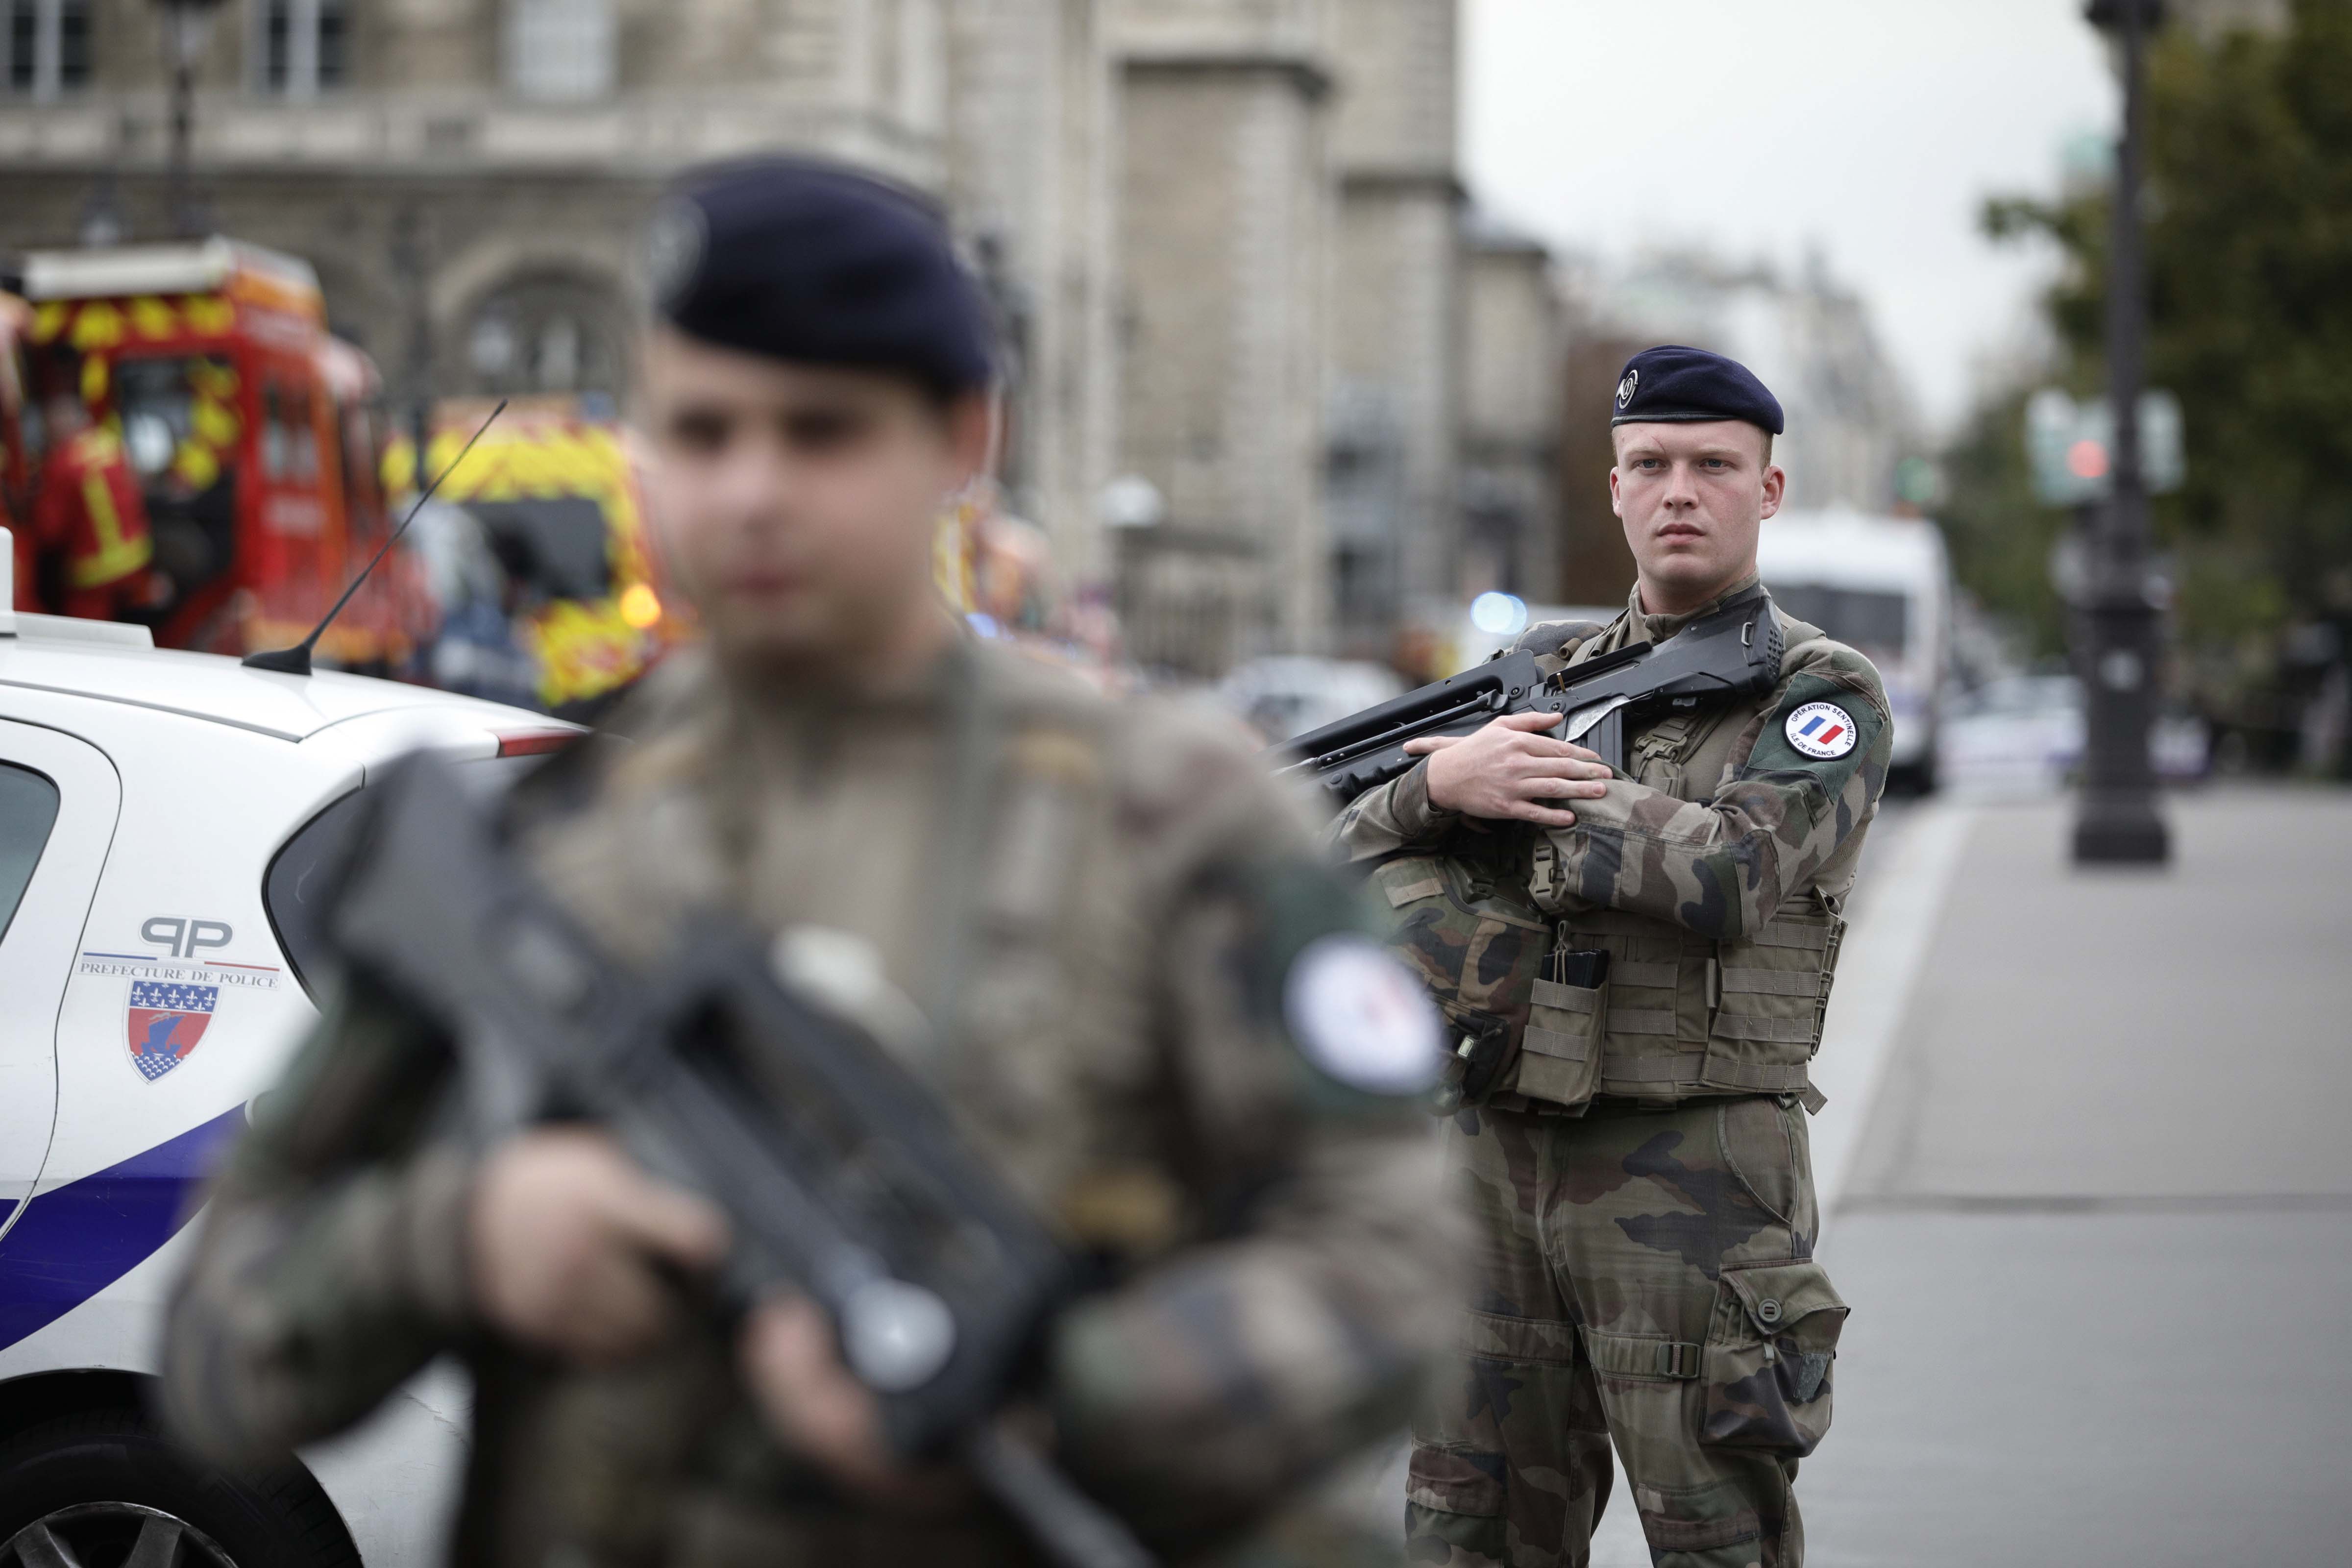 Four police killed in Paris stabbing, attacker shot dead